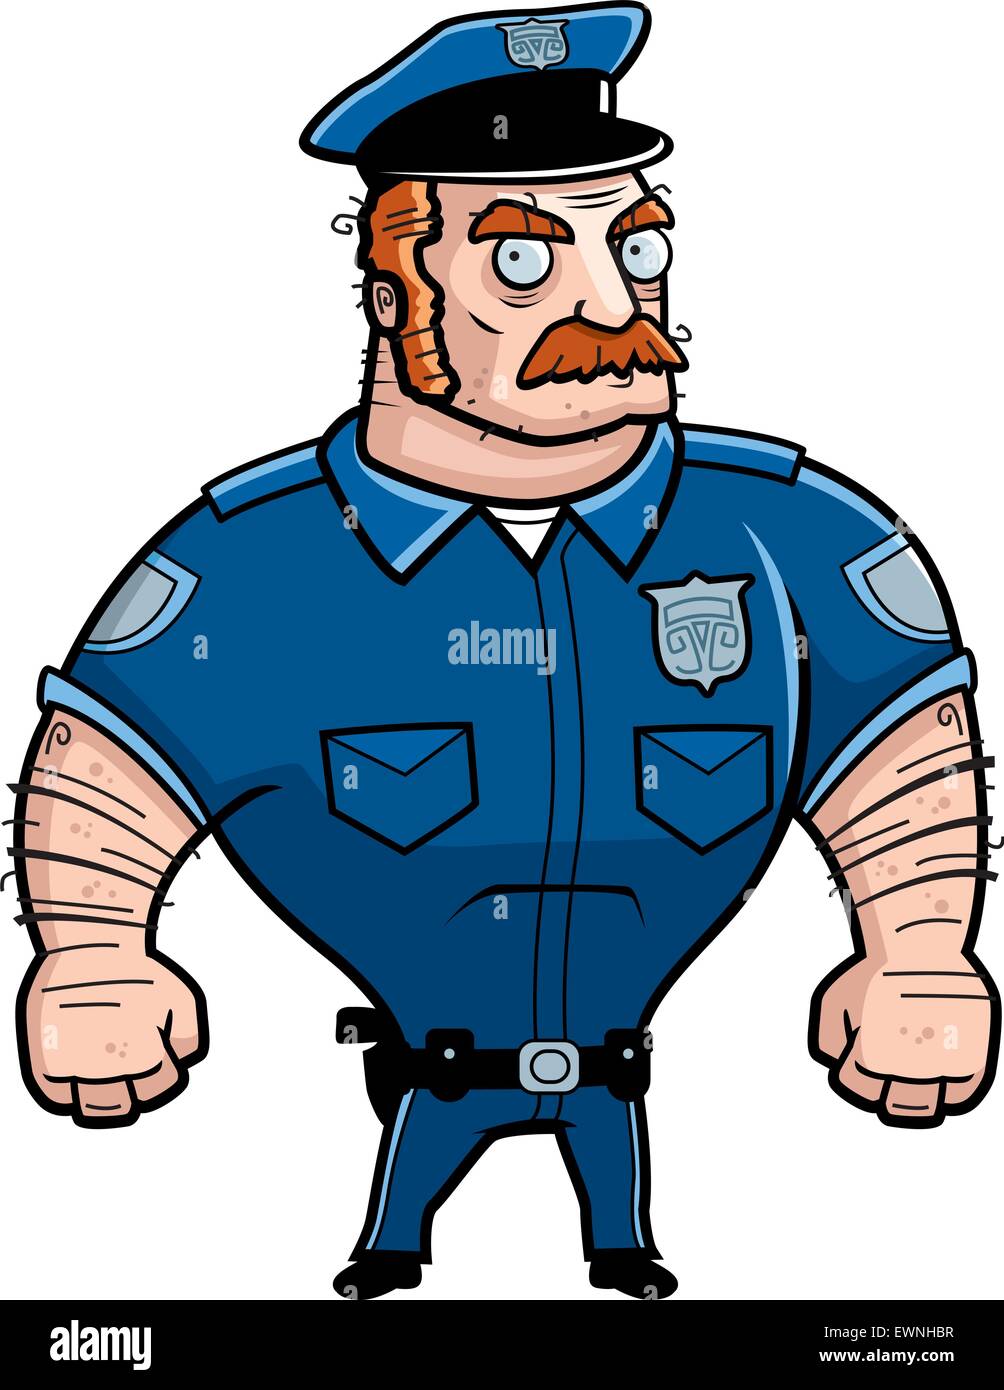 Policía de dibujos animados fotografías e imágenes de alta resolución -  Alamy